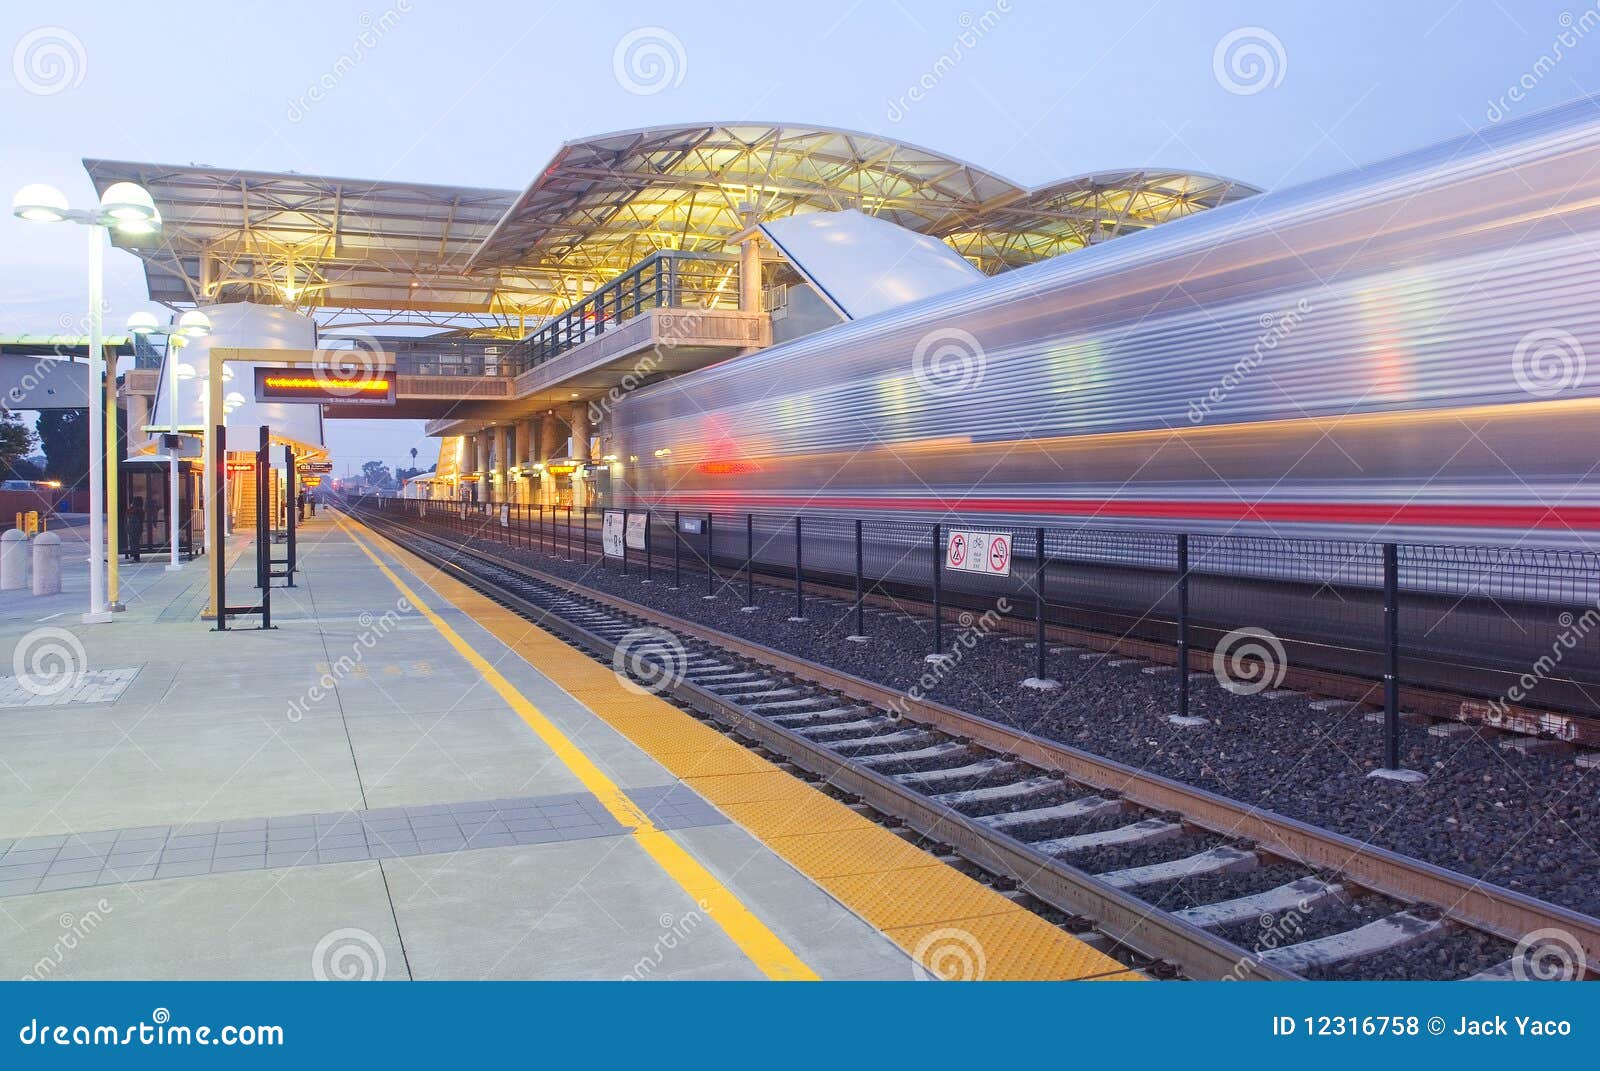 intermodal rapid transit station & commuter train